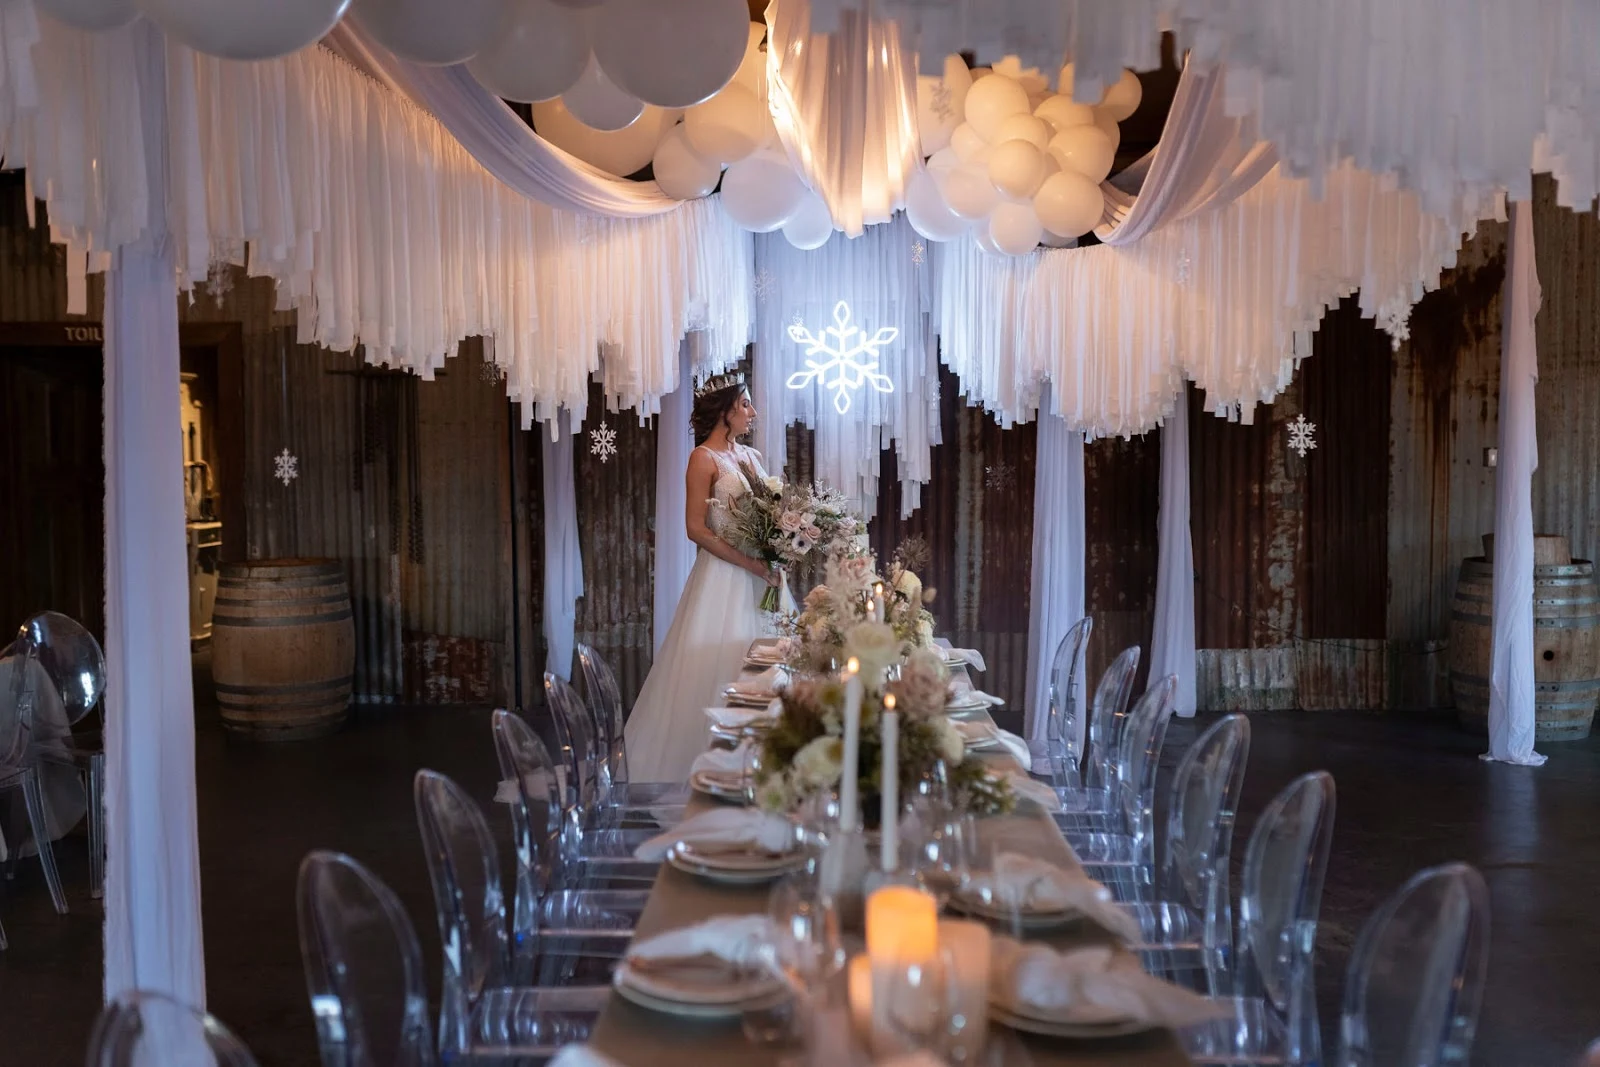 matts photography adams peak wedding venue bridal gown cake styling winter weddings floral design